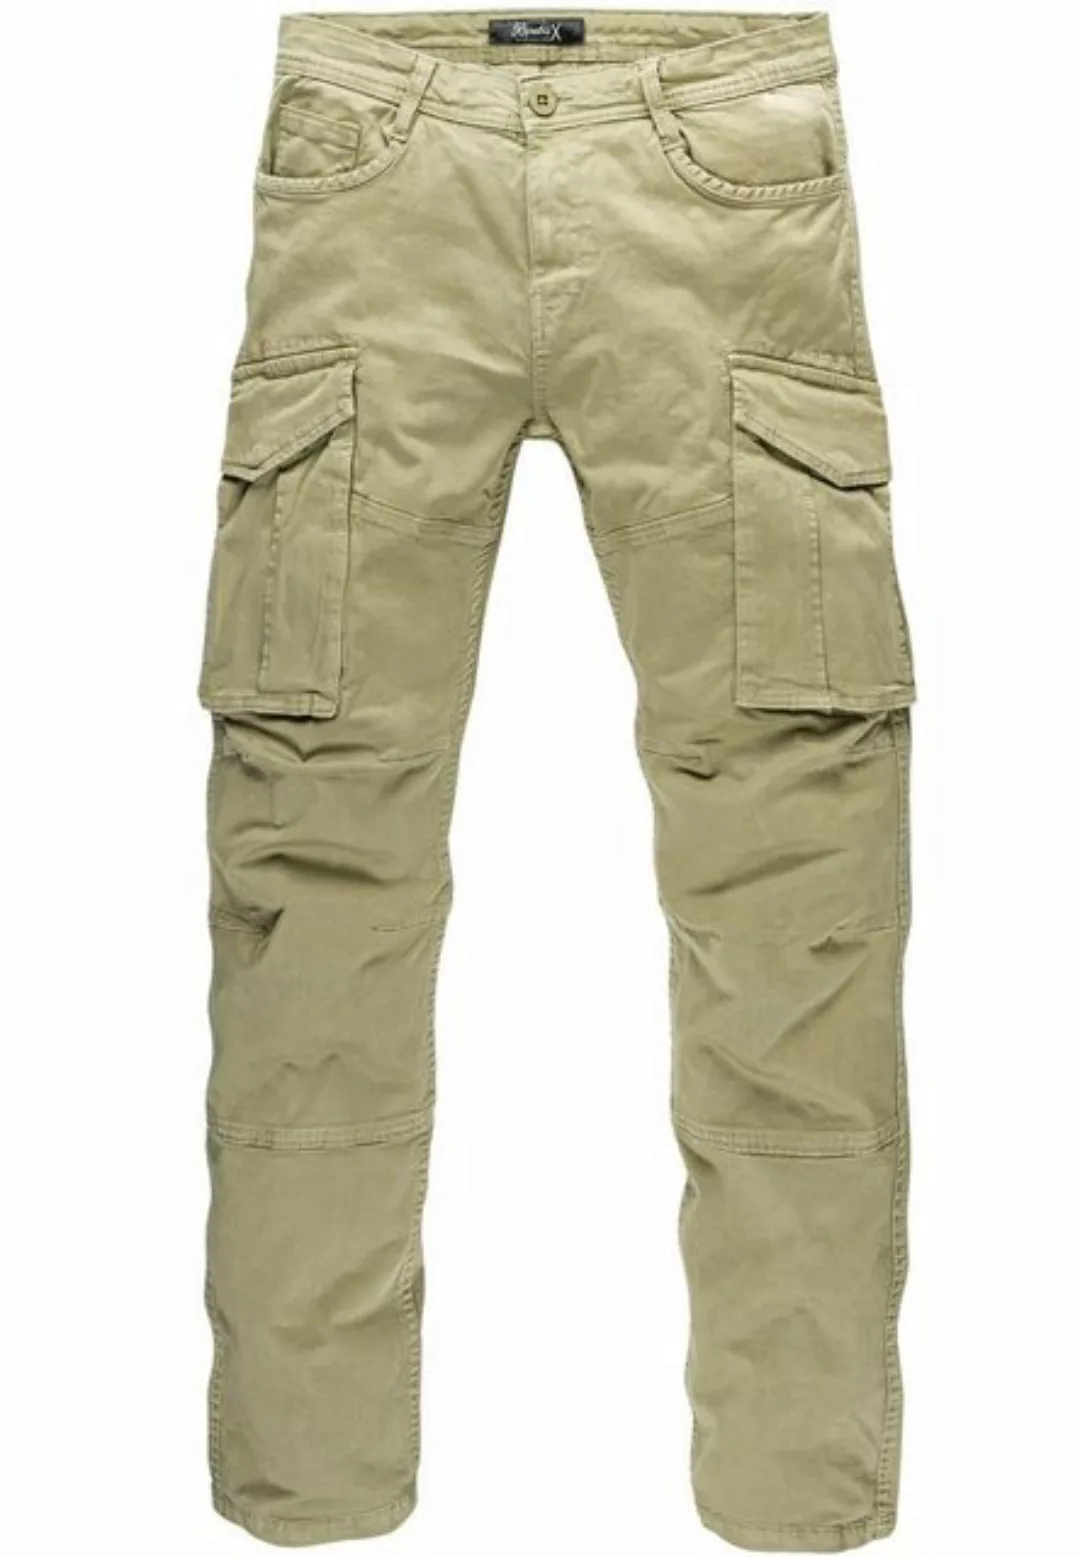 REPUBLIX Cargohose LENNY Herren Cargo Jogger Chino Hose Jeans günstig online kaufen